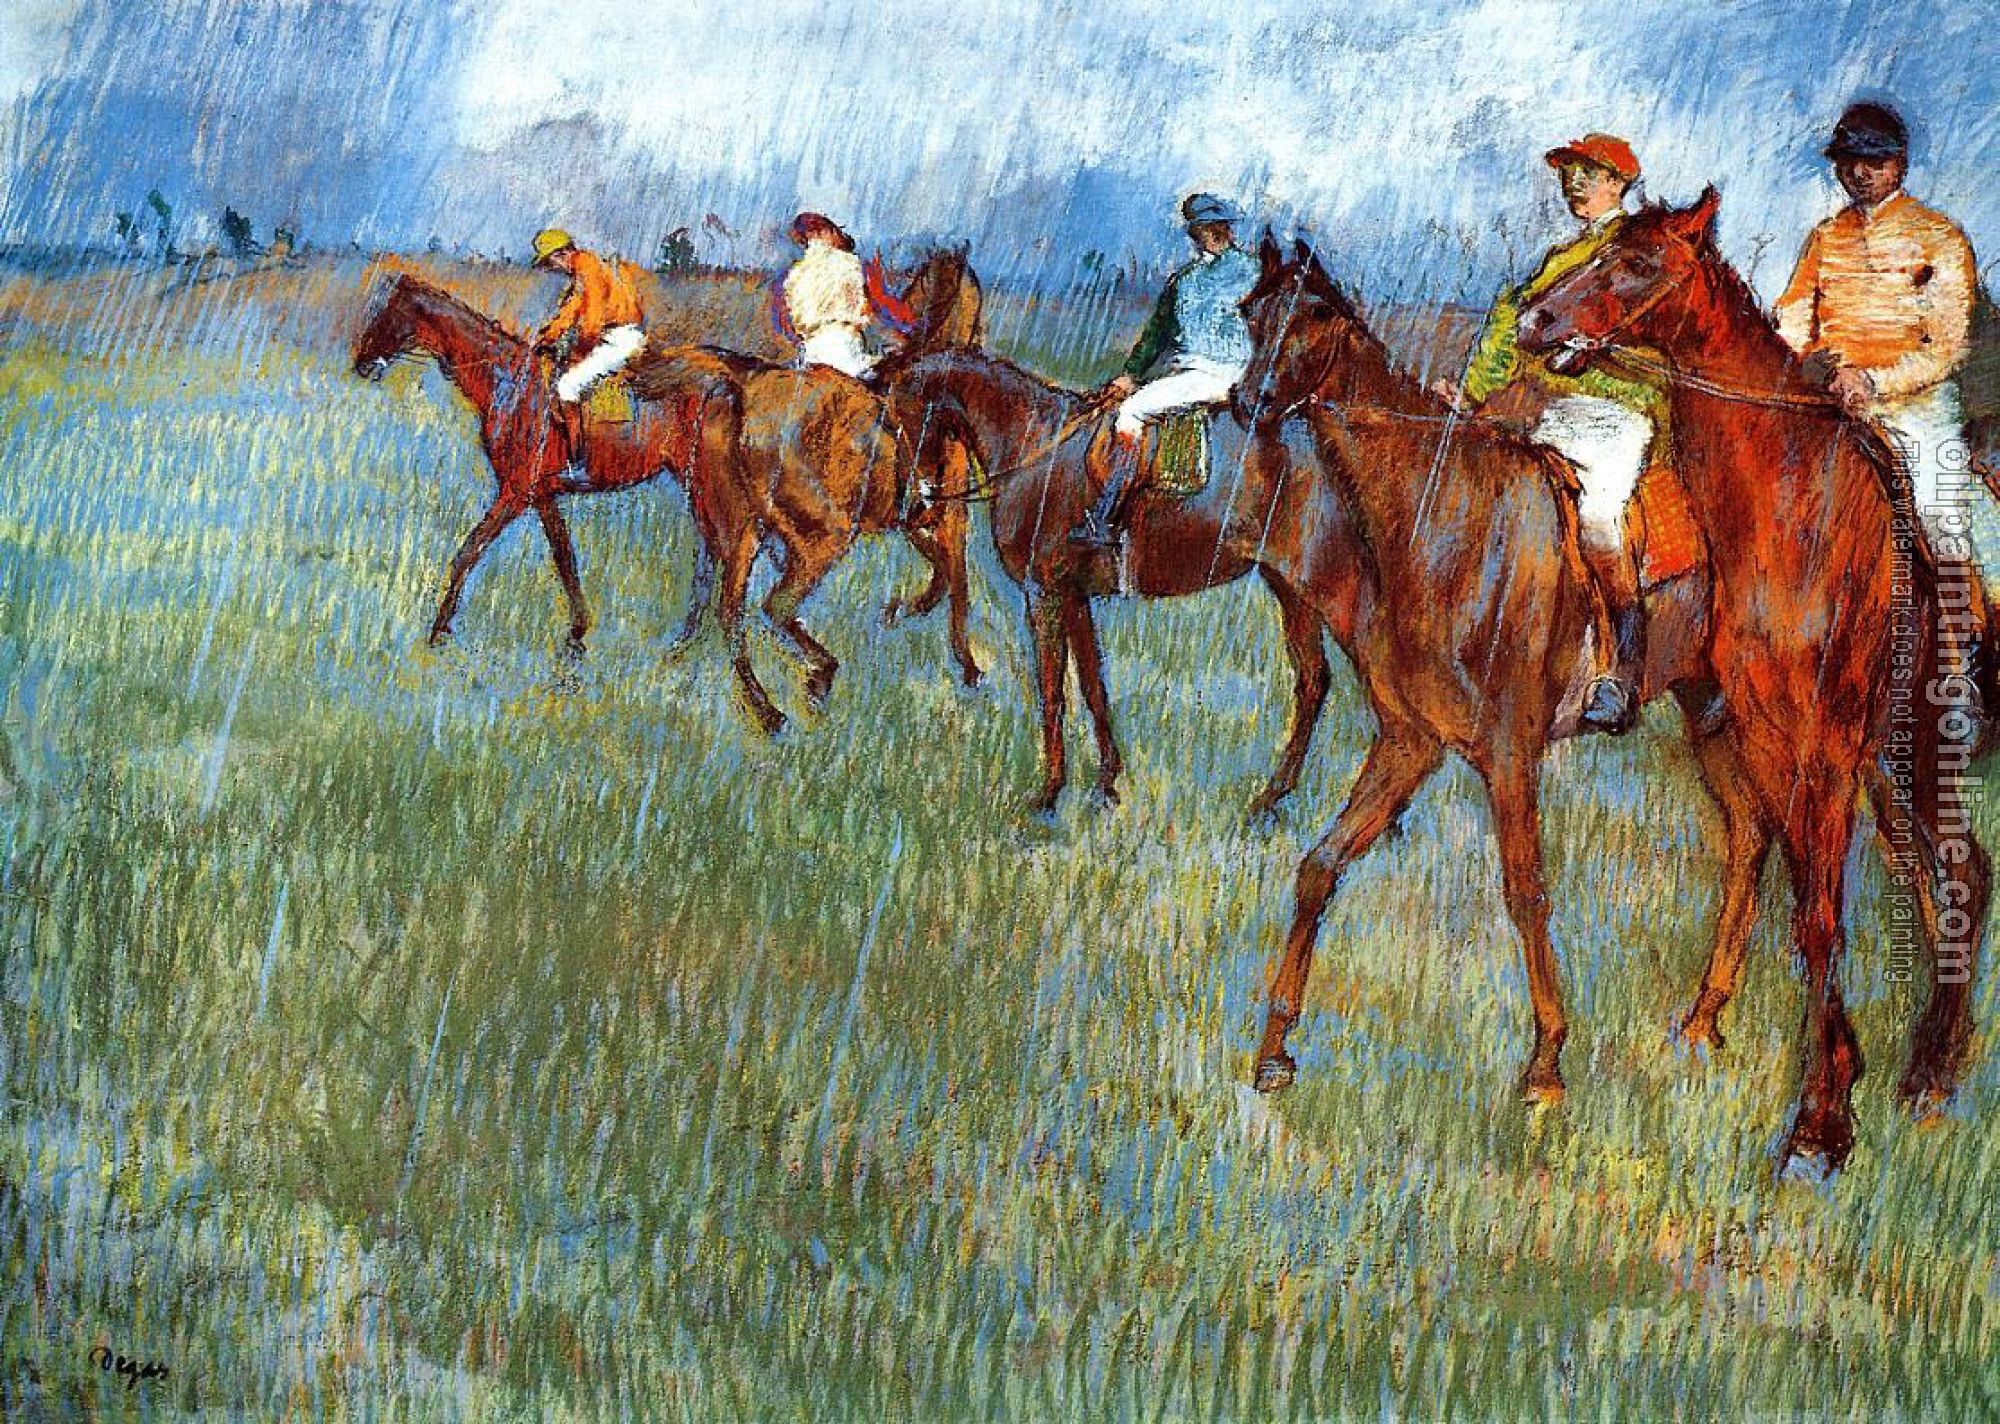 Degas, Edgar - Jockeys in the Rain